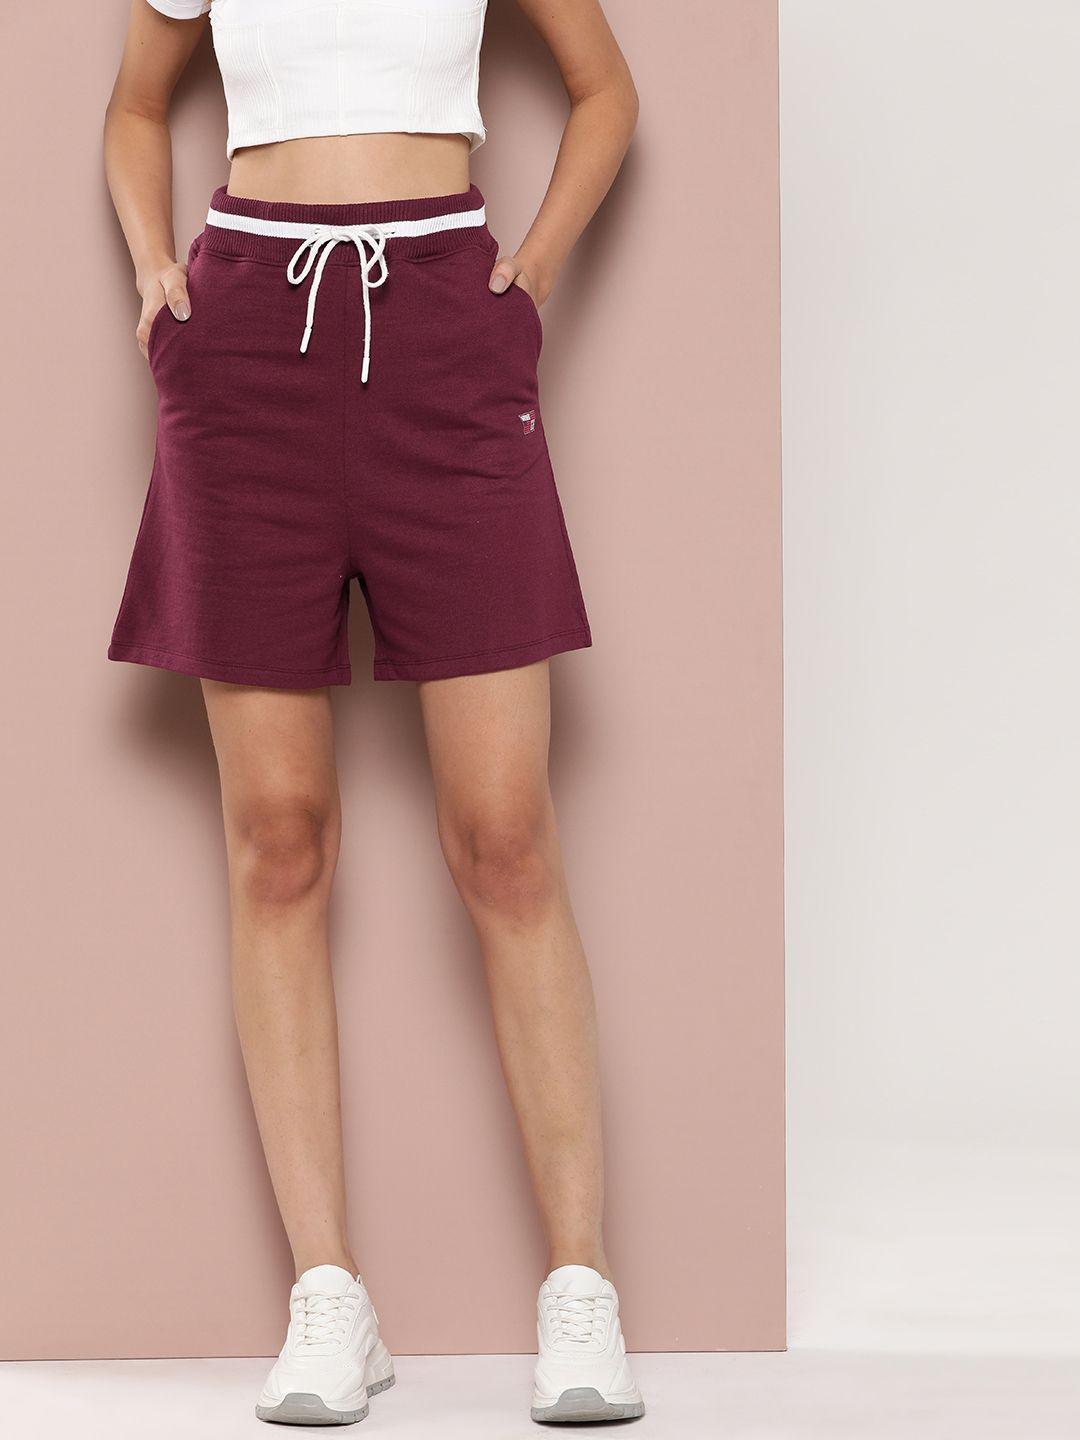 harvard women contrast tipping shorts